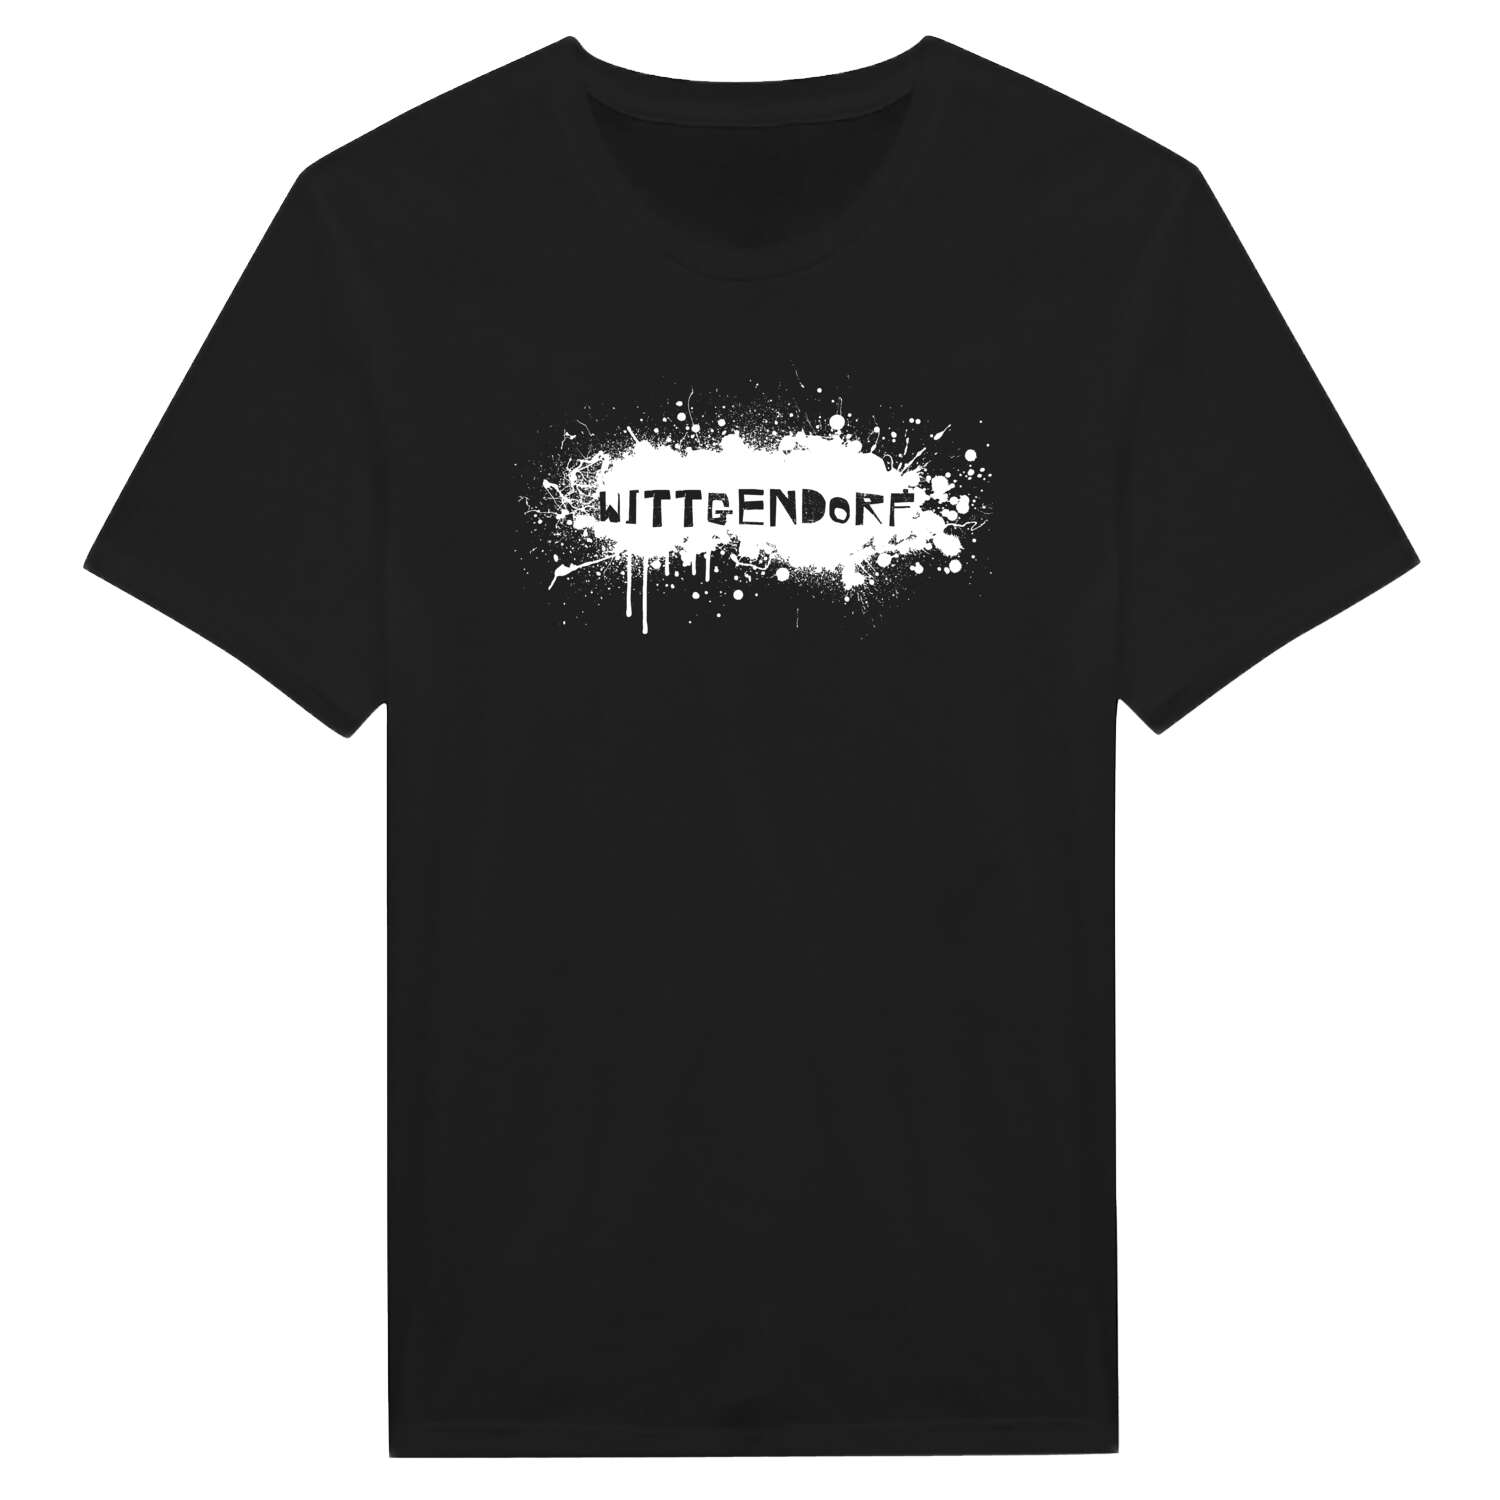 Wittgendorf T-Shirt »Paint Splash Punk«